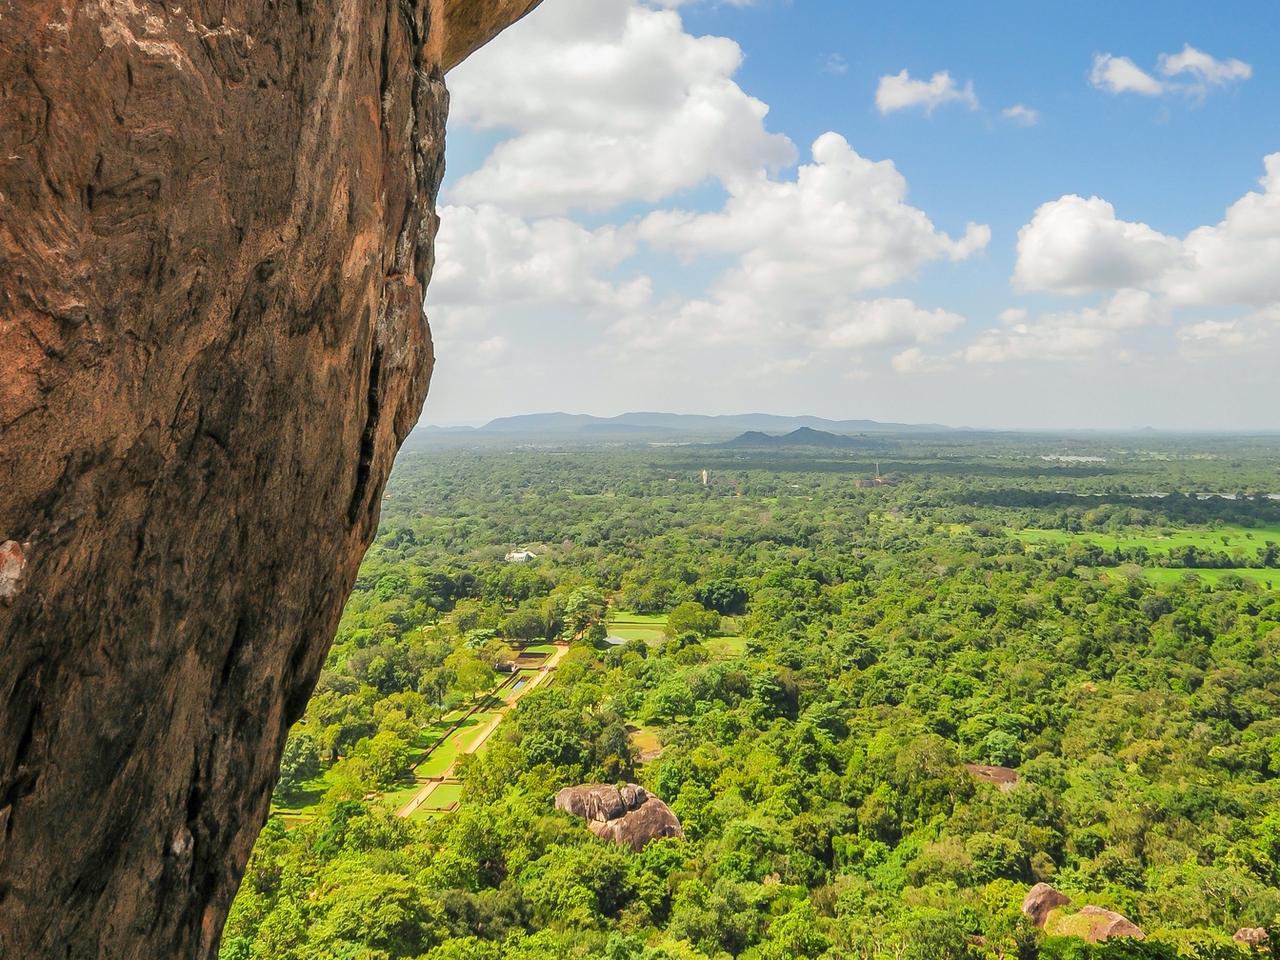 Looking over the rainforest of Sri Lanka.